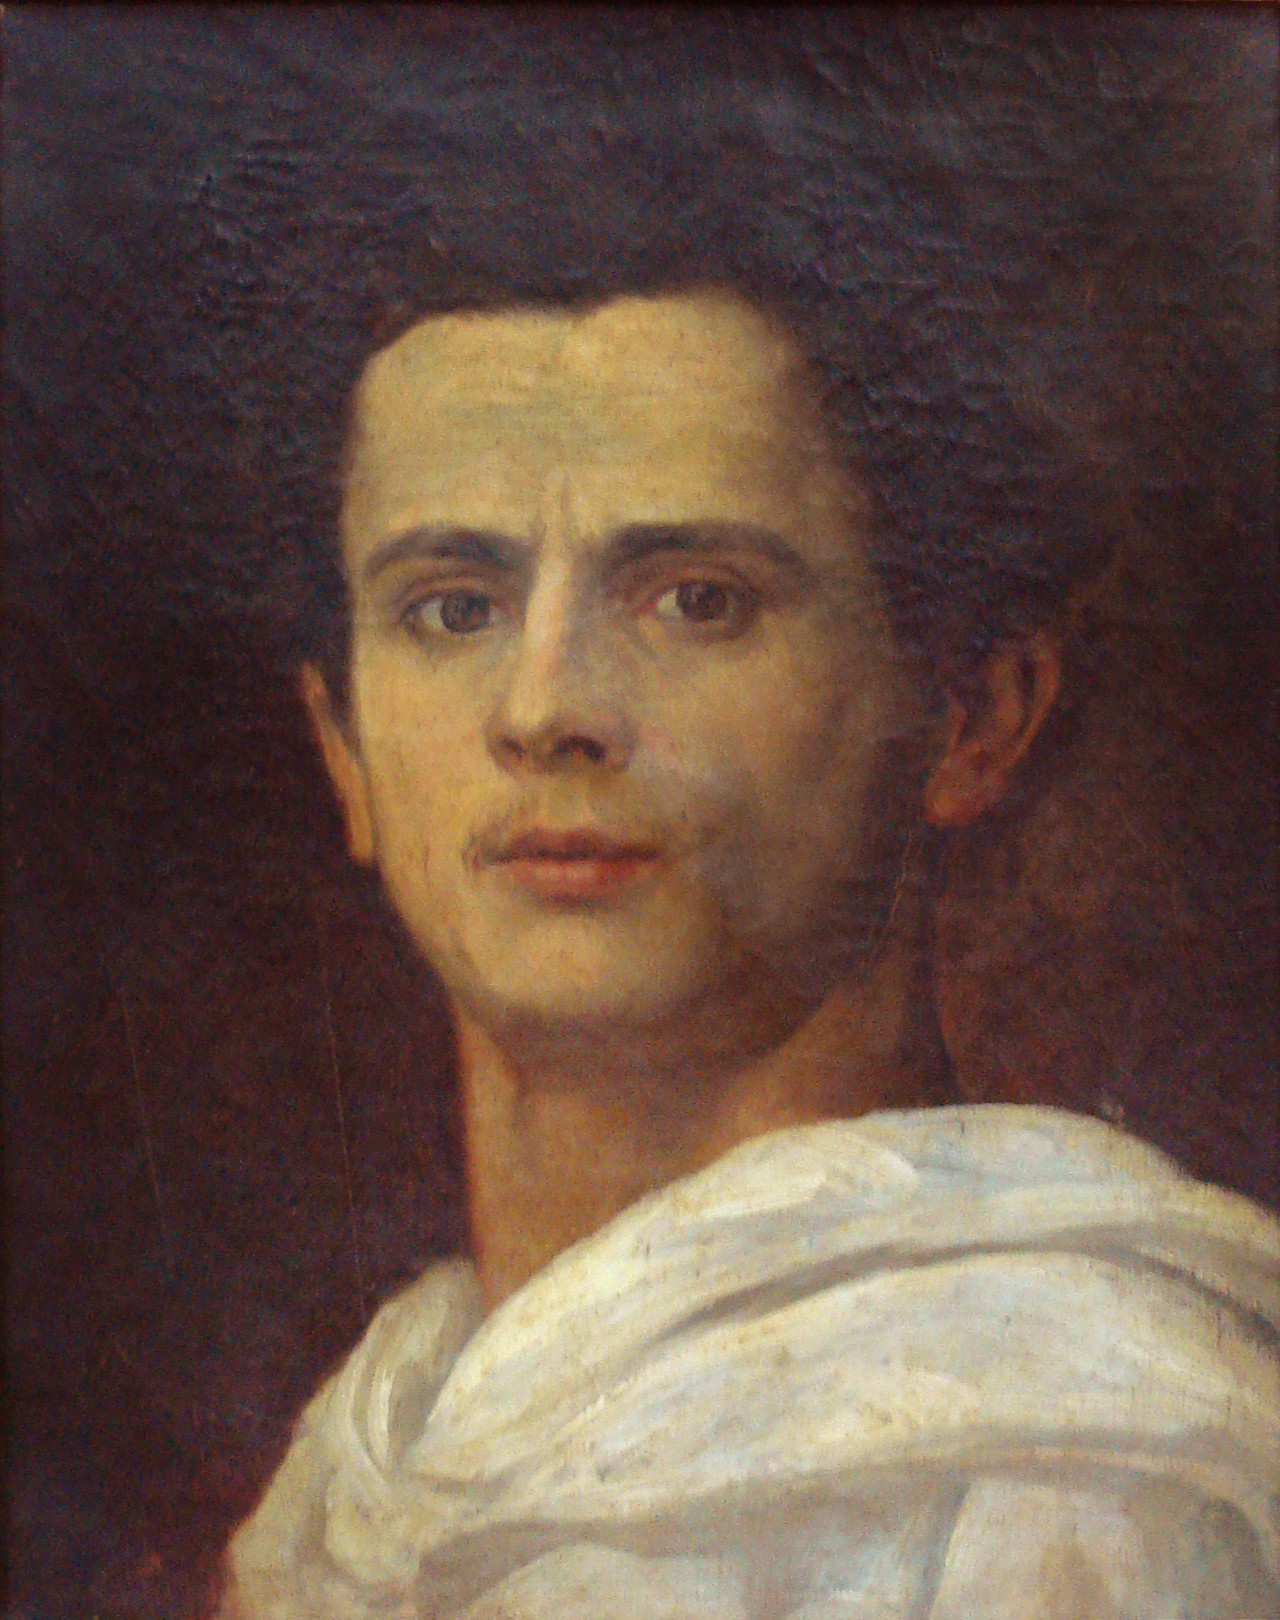 Хосе Феррас Алмейда Джуниор - 8 Мая 1850 - 13 Ноября 1899